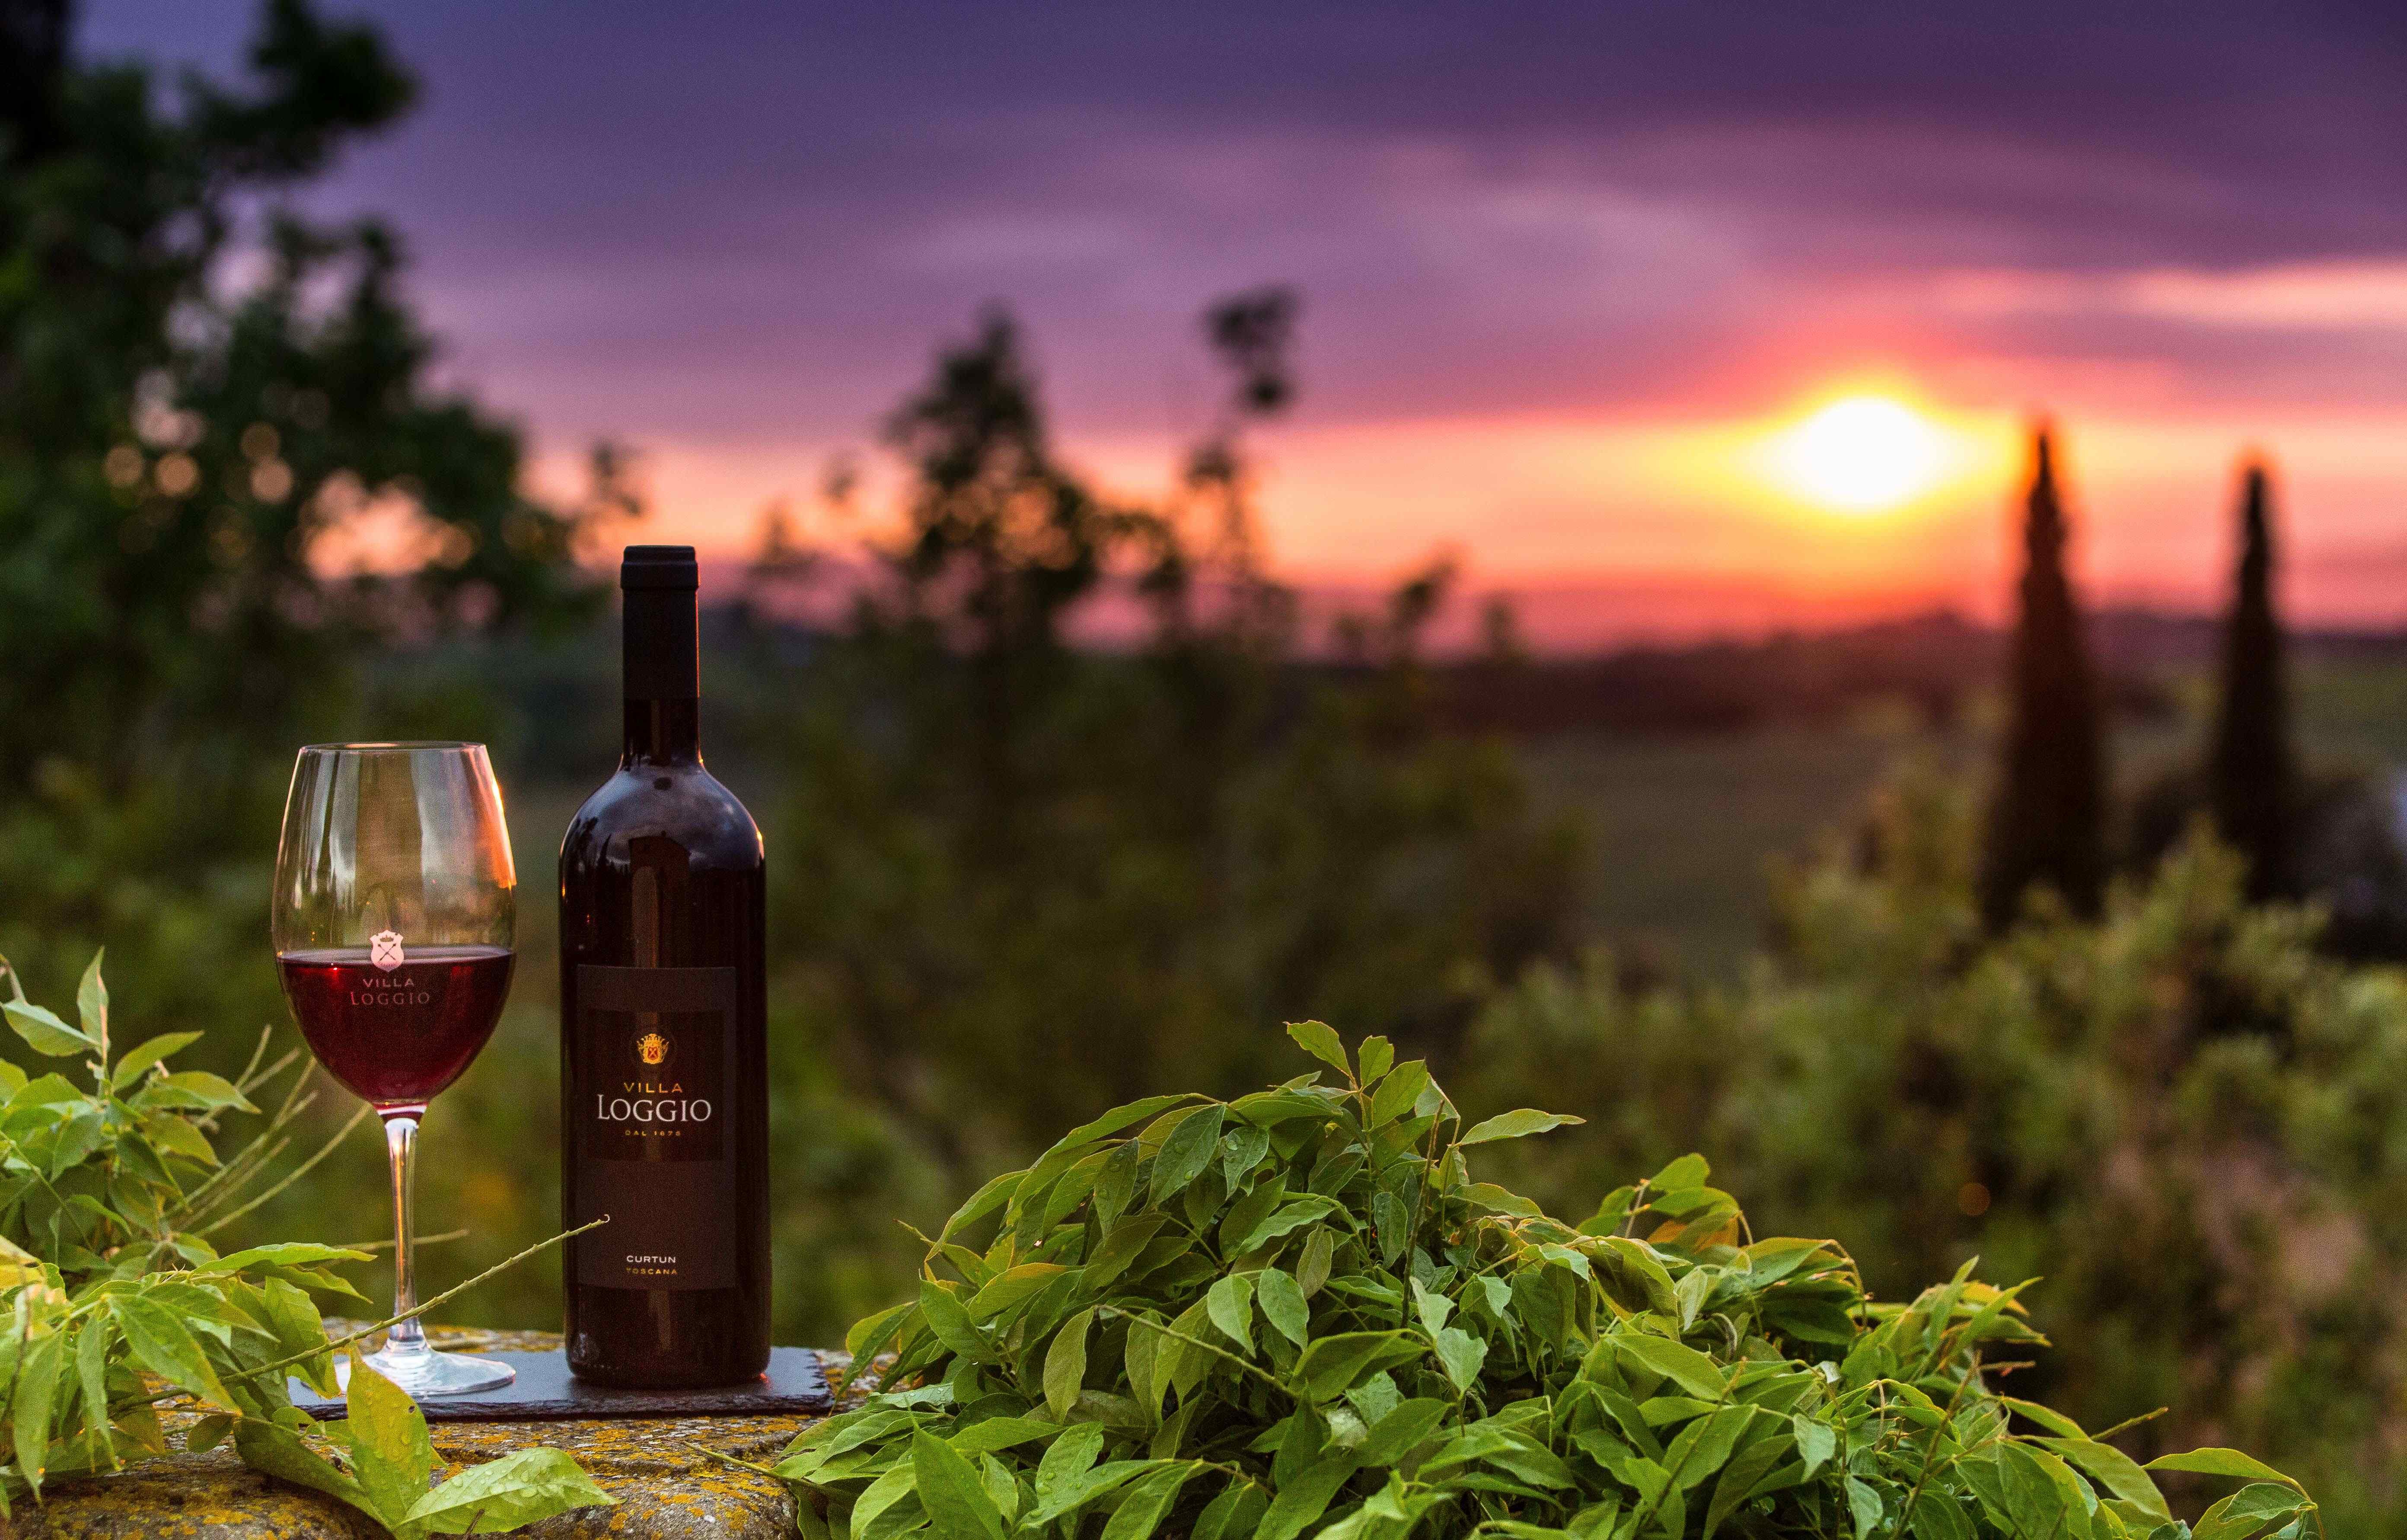 Vino. Вино Тоскана. Вина Тосканы Италия. Вино на природе. Вино пейзаж.